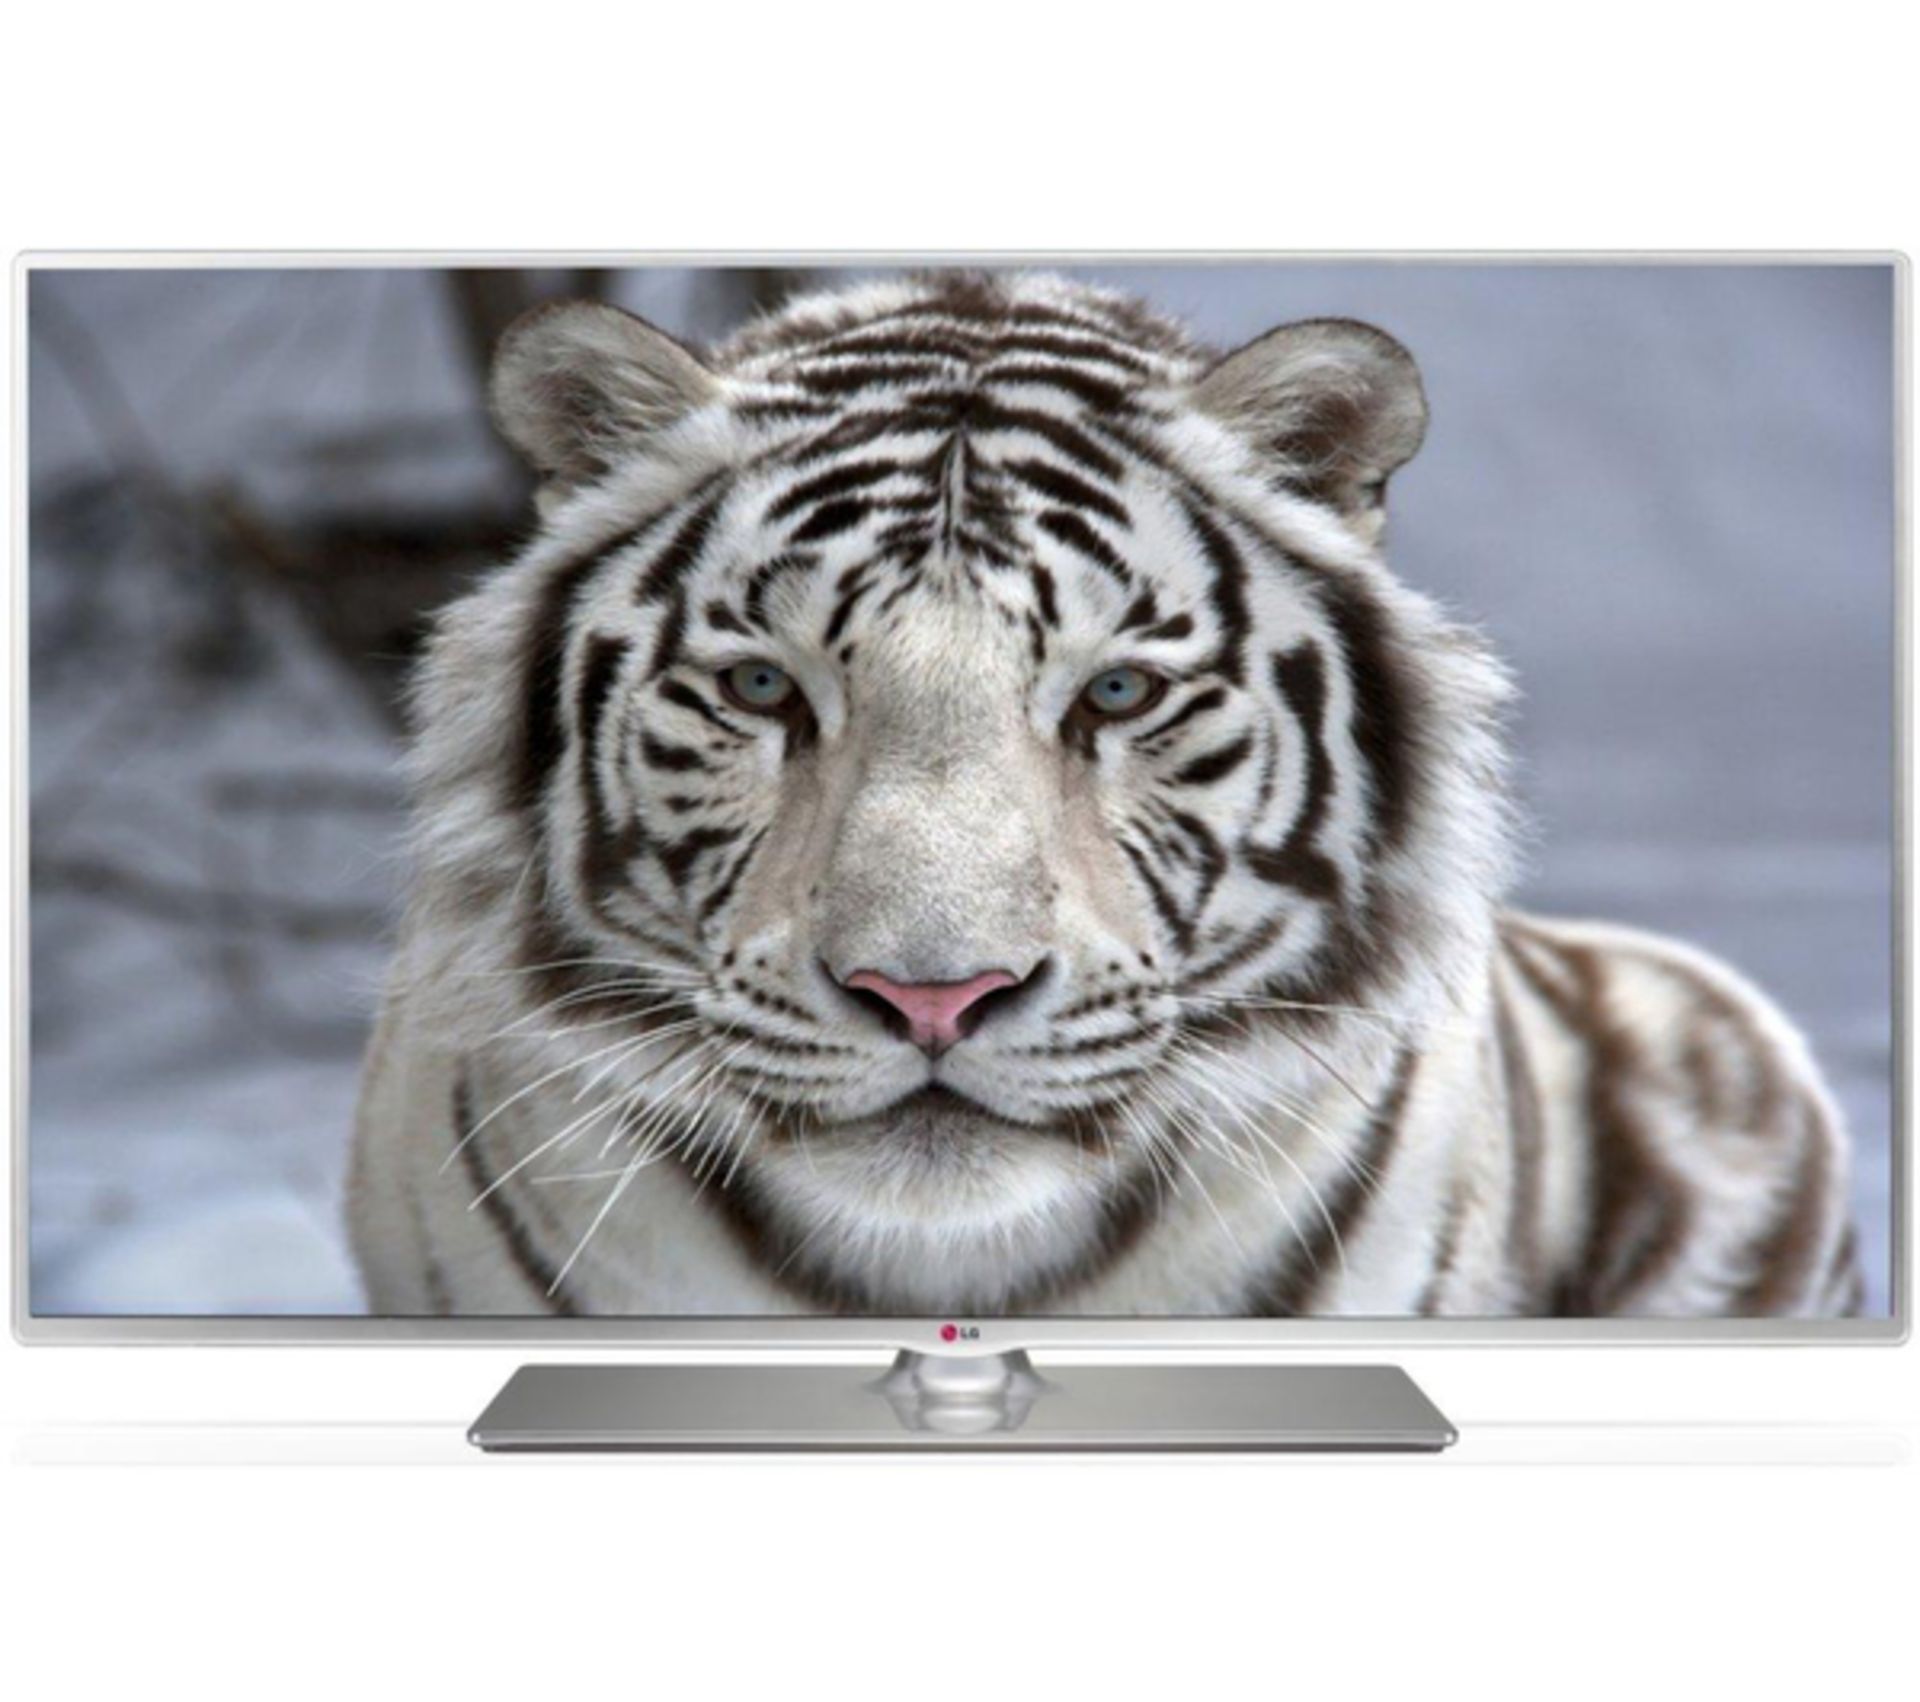 V LG GLB585V 42" Wide Screen LED Smart TV HD - freeview - 1080P - WiFi